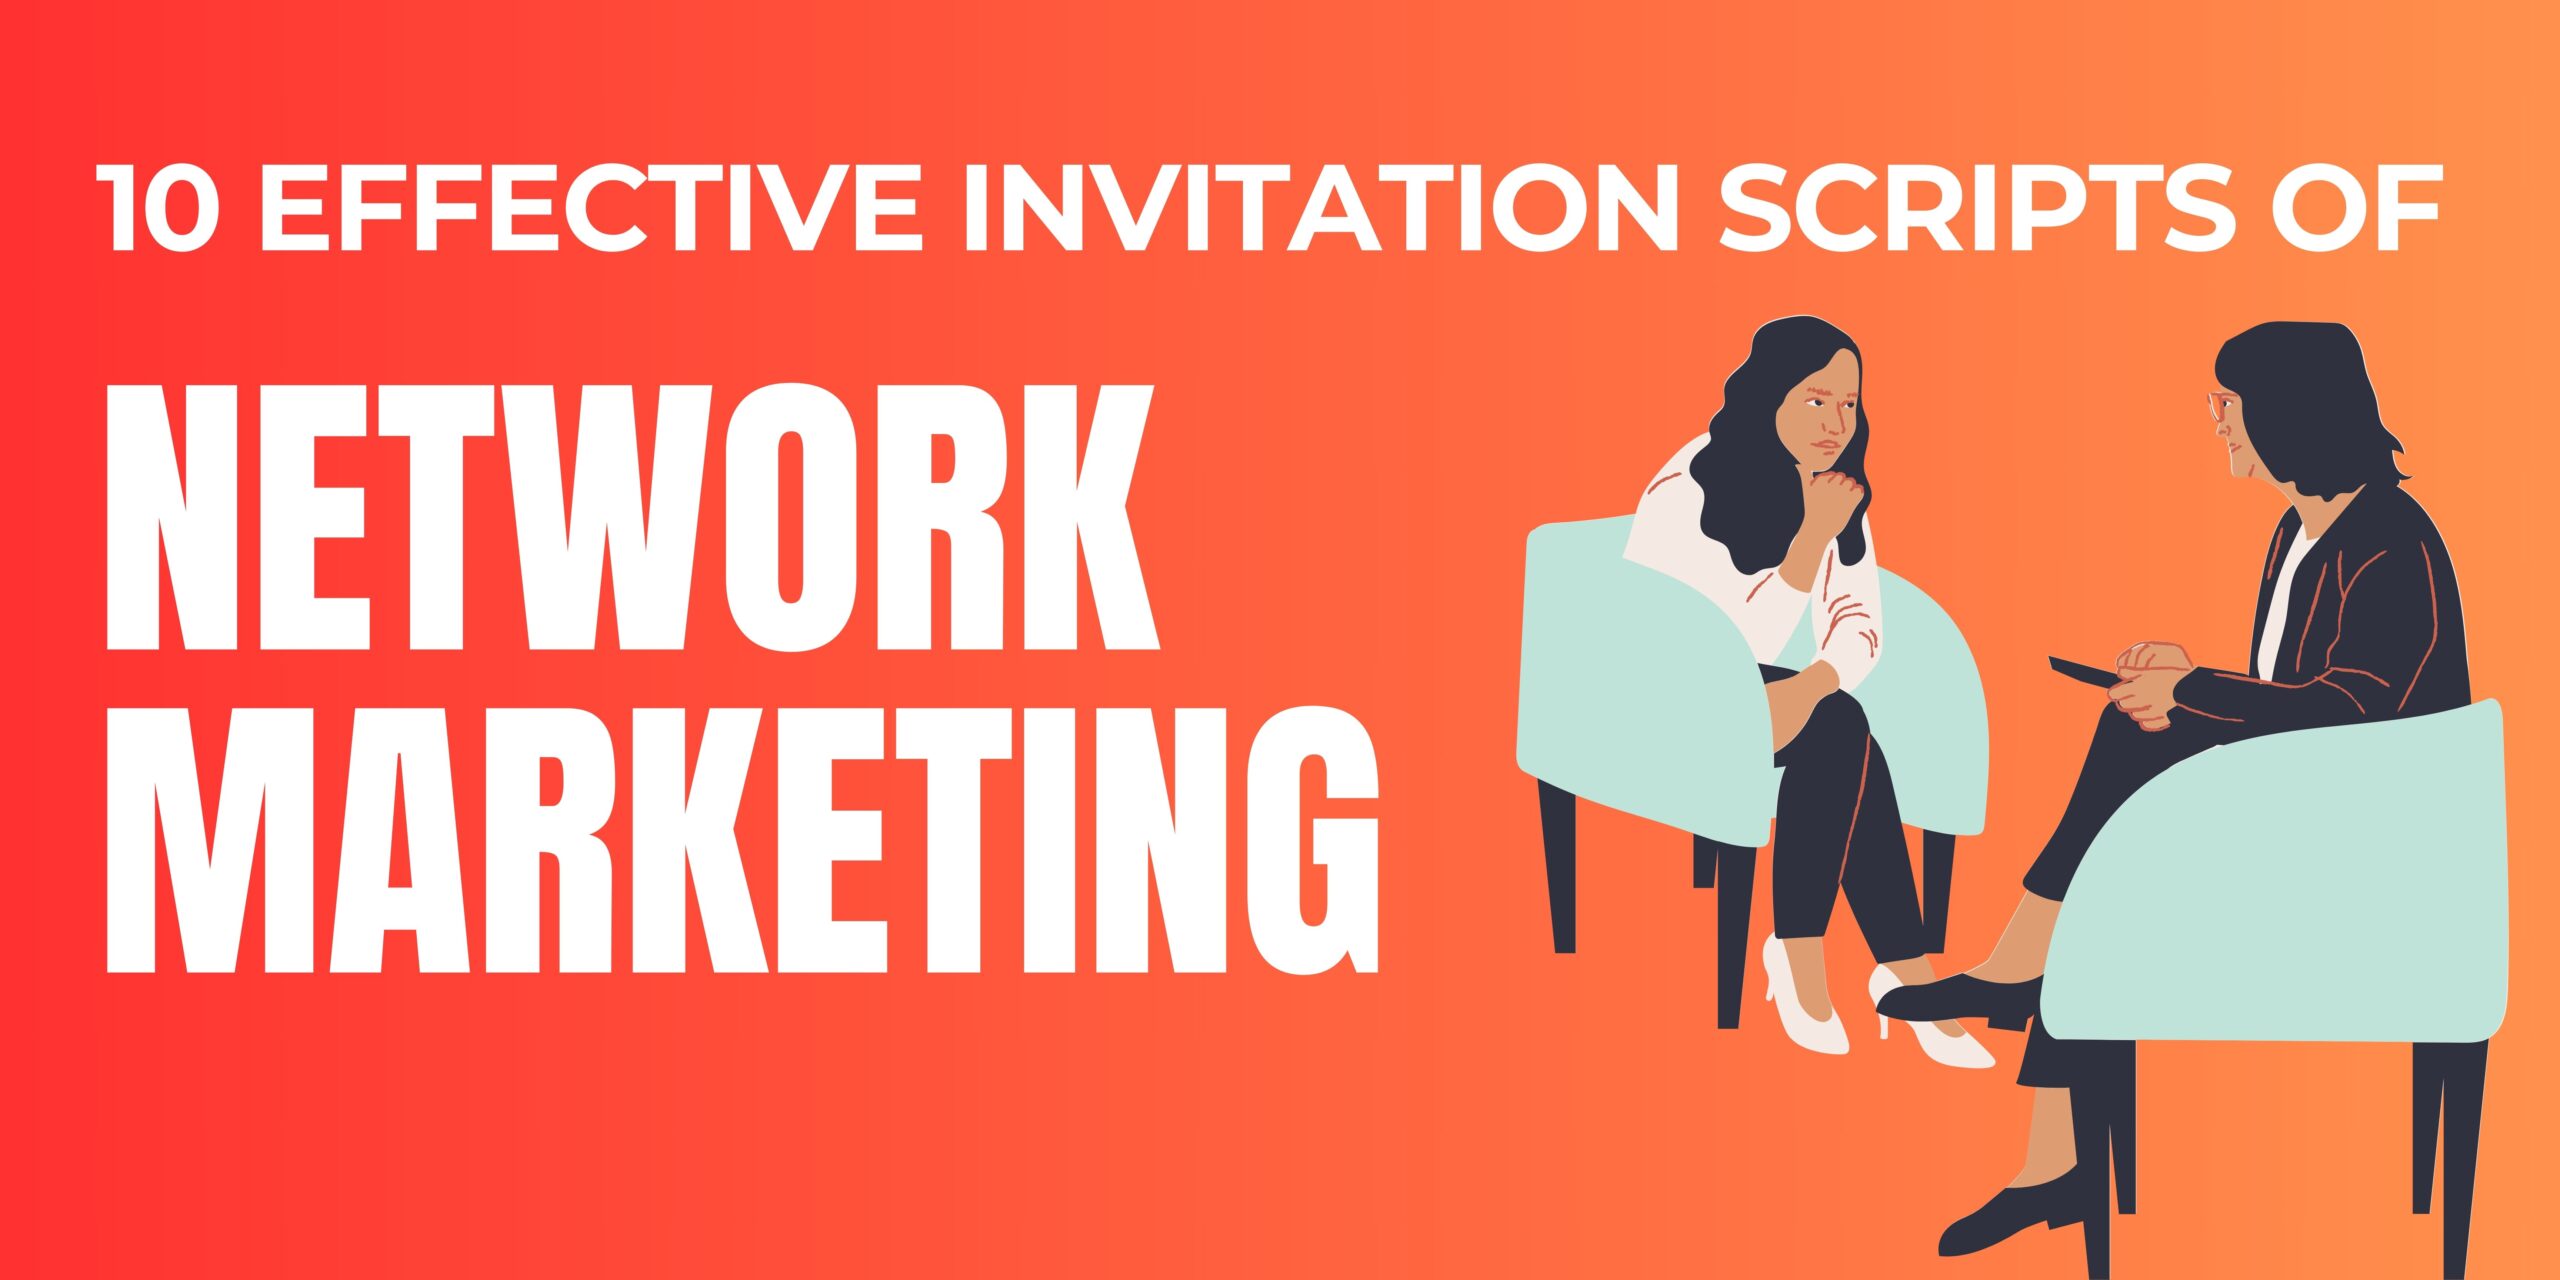 10 Effective Invitation Scripts of network marketing business